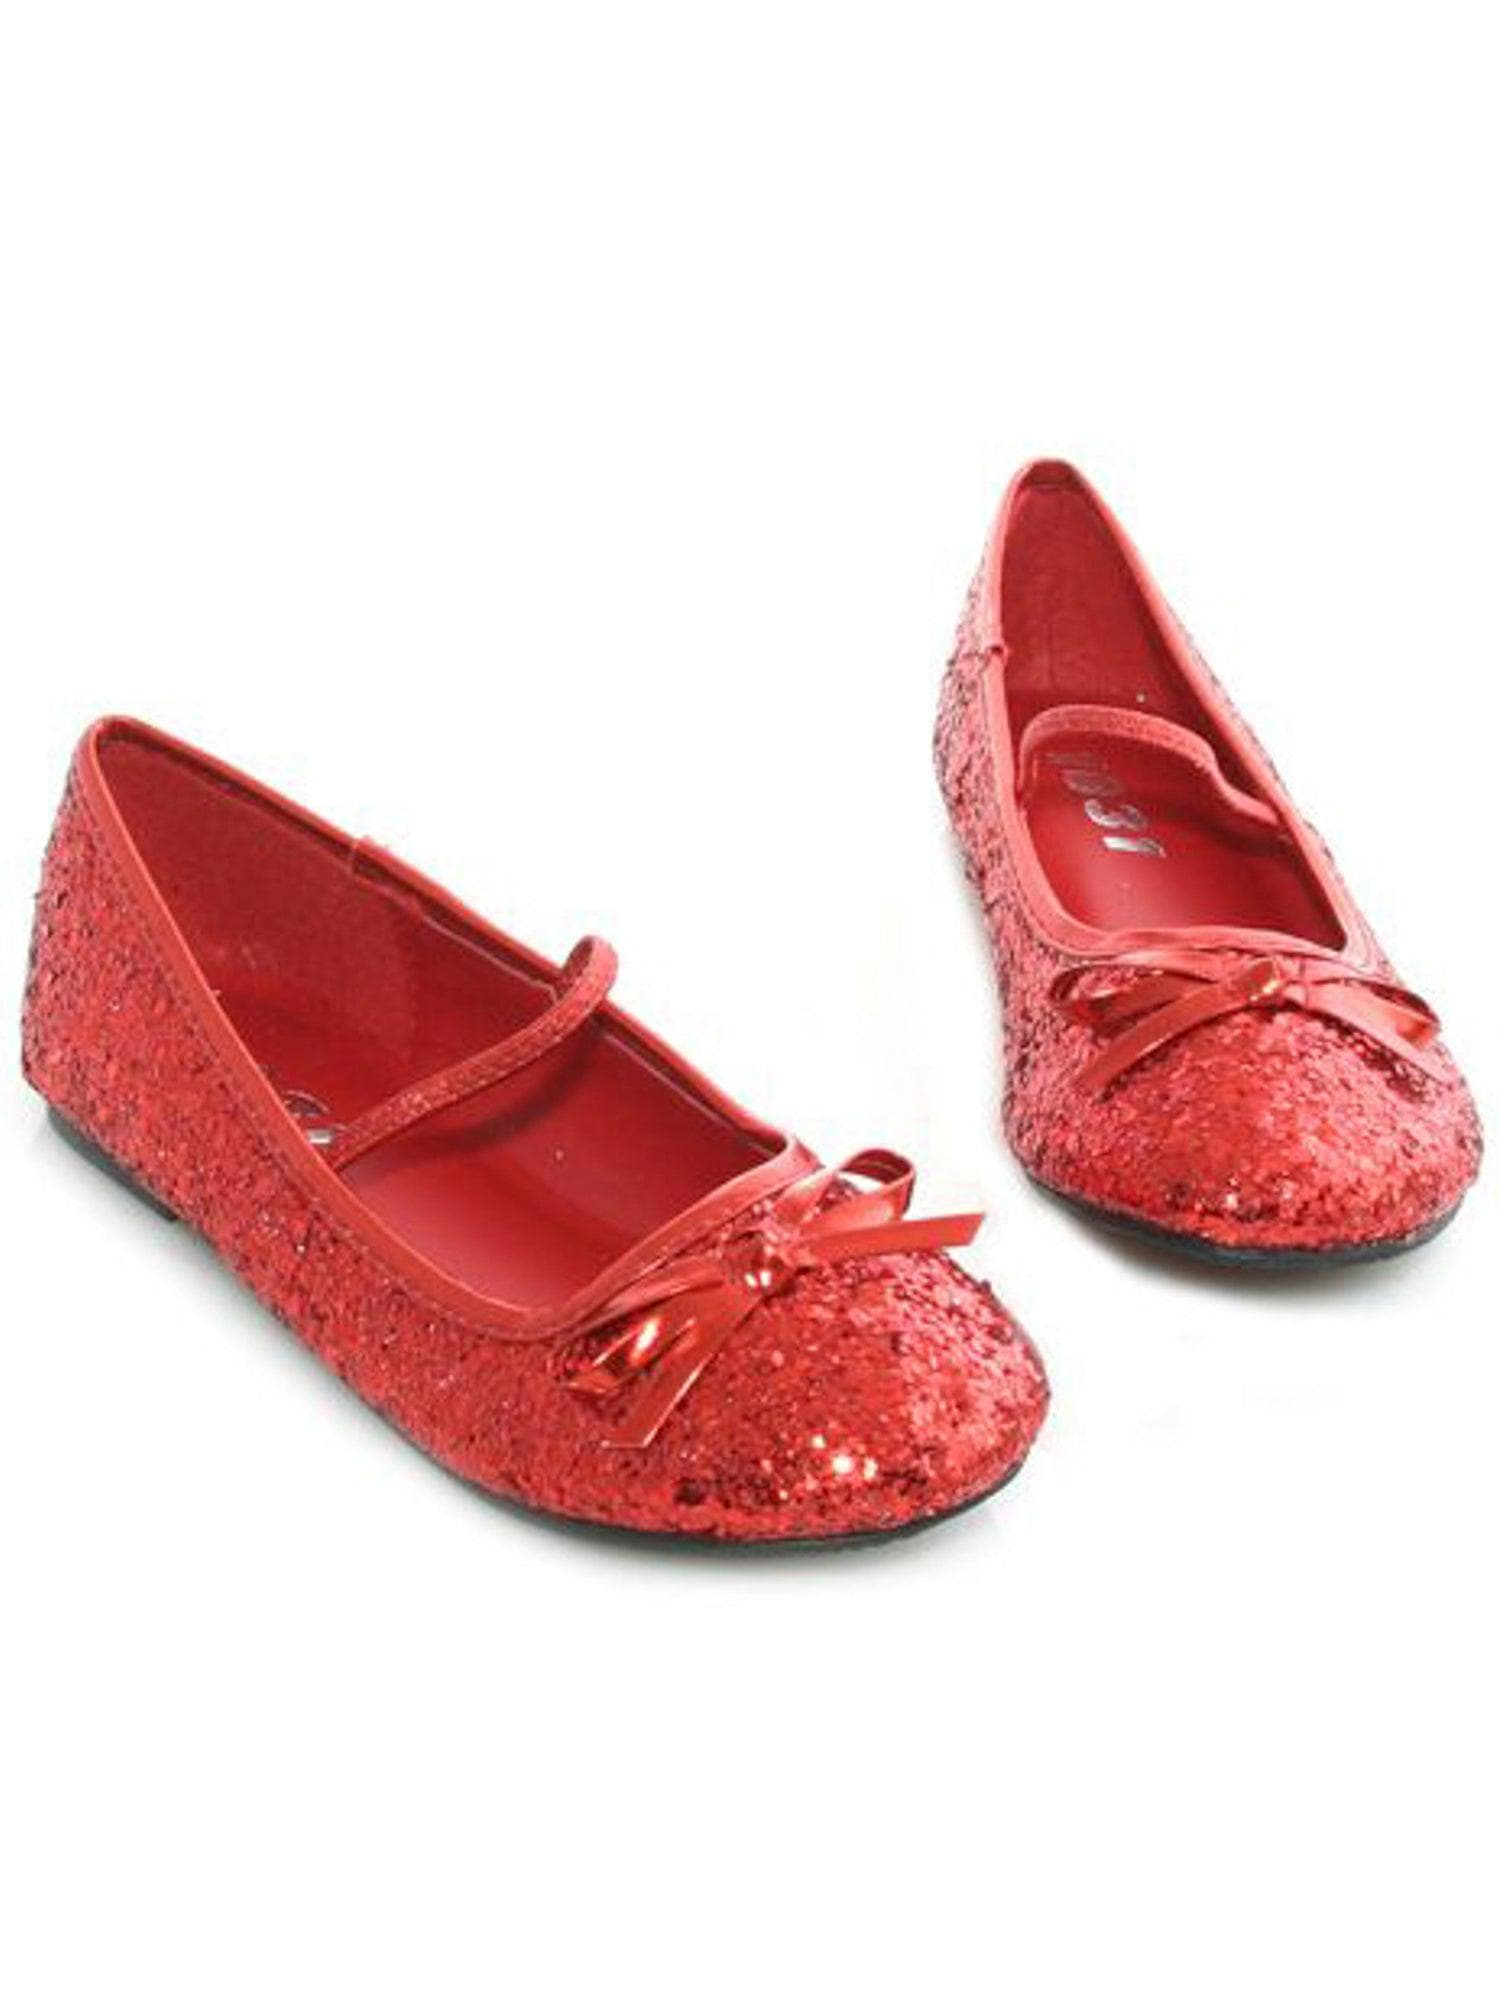 Kids Red Glitter Slipper Shoes - costumes.com